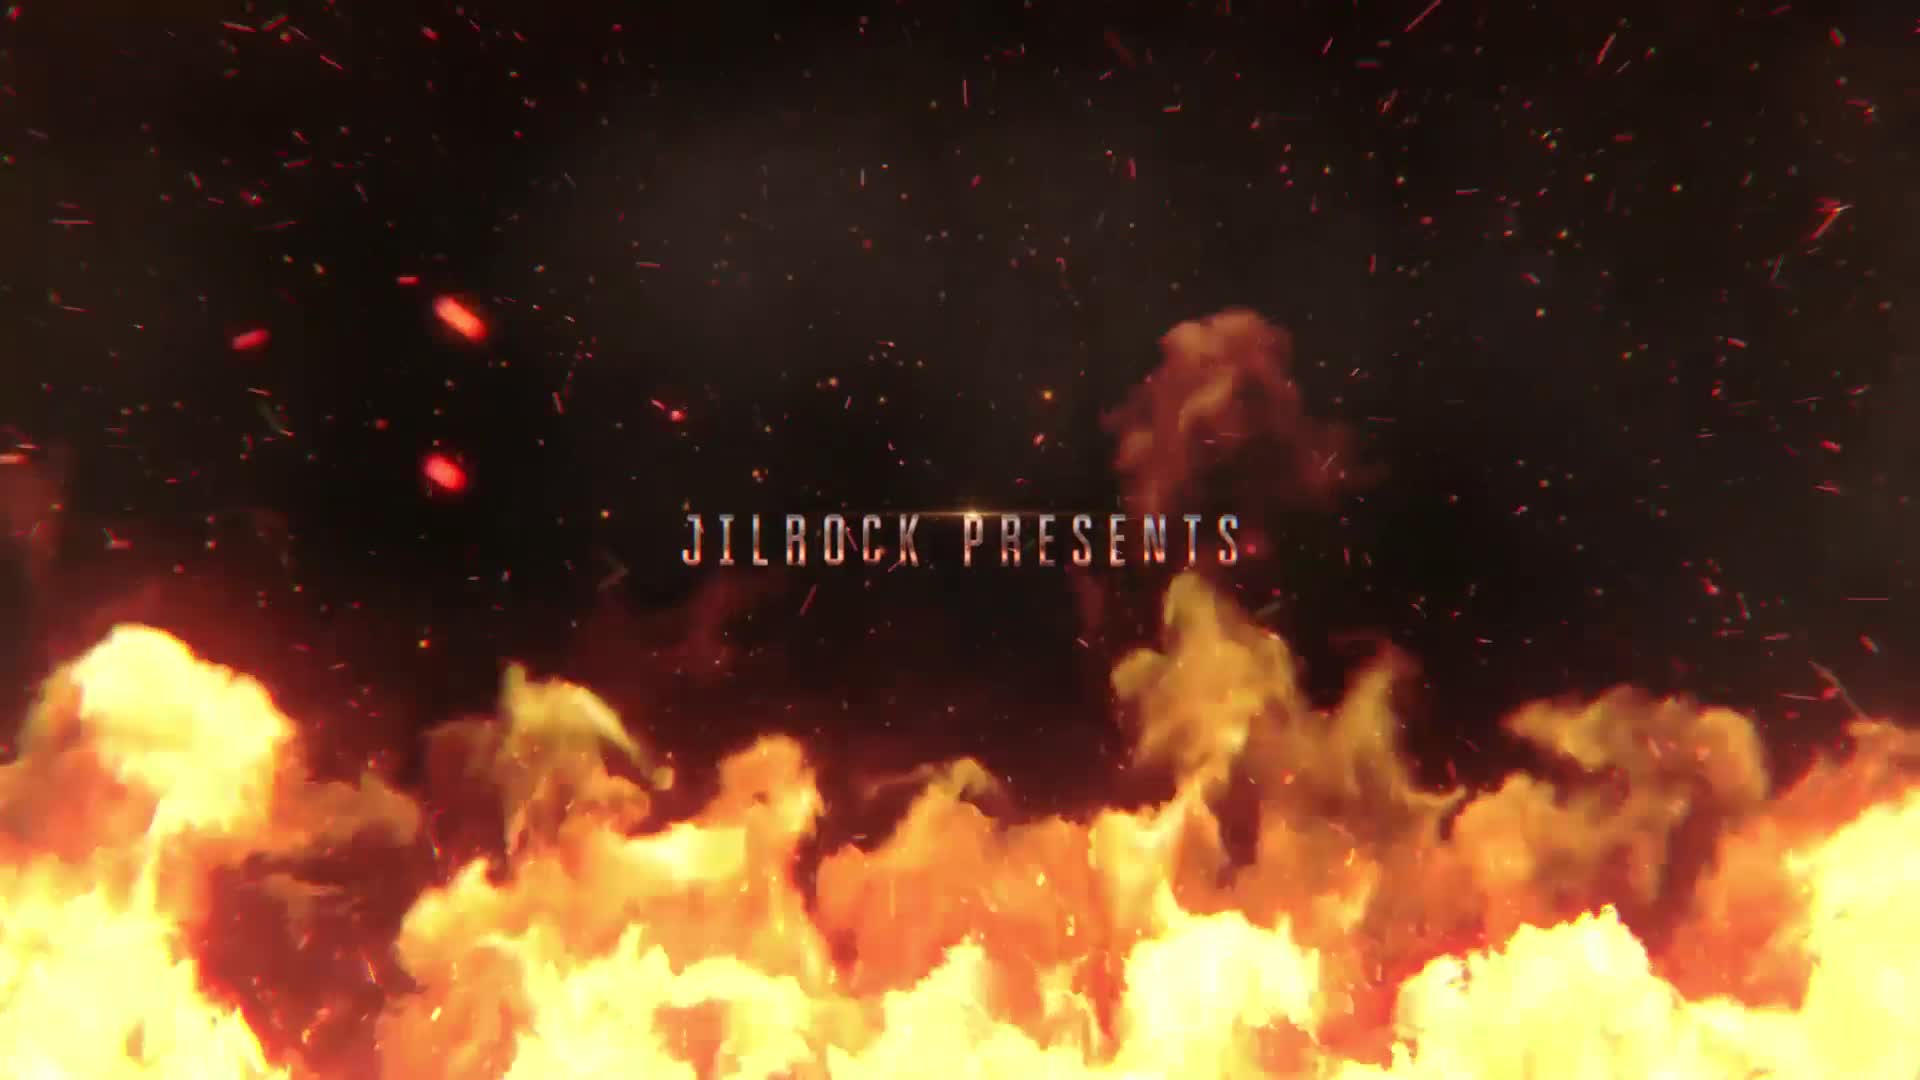 Ultimate Fire Trailer - Download Videohive 20045183